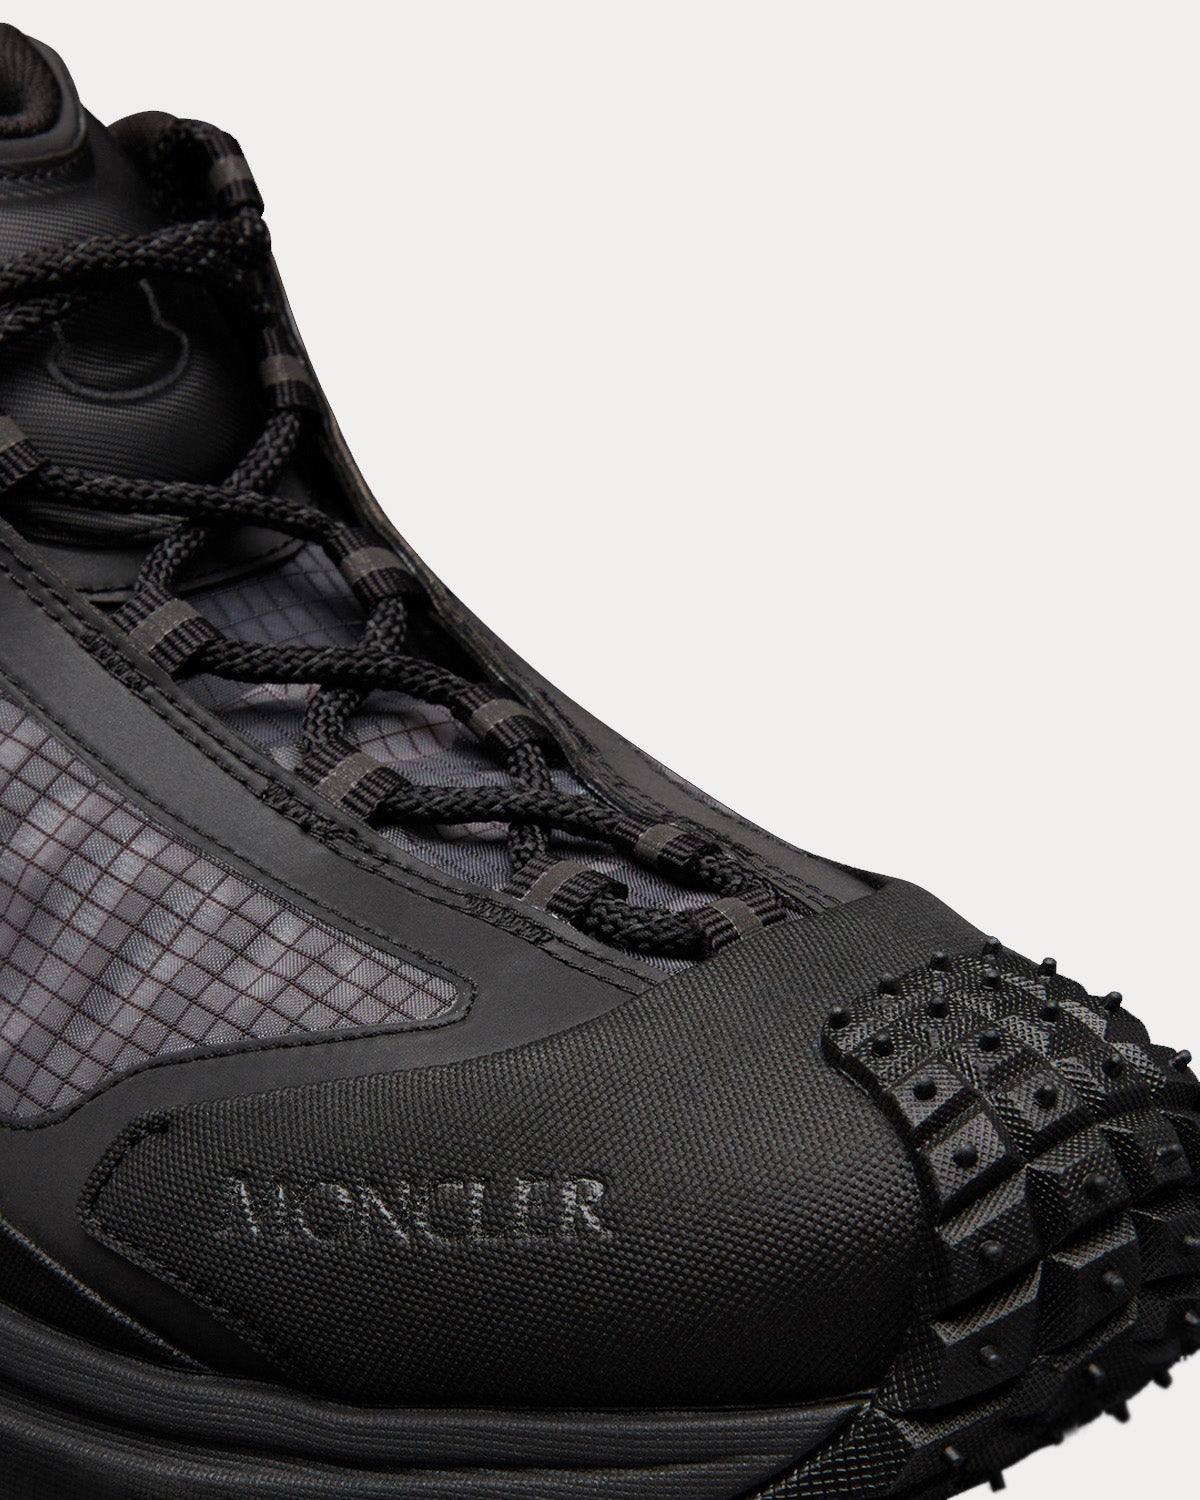 Moncler - Trailgrip Lite Black Low Top Sneakers